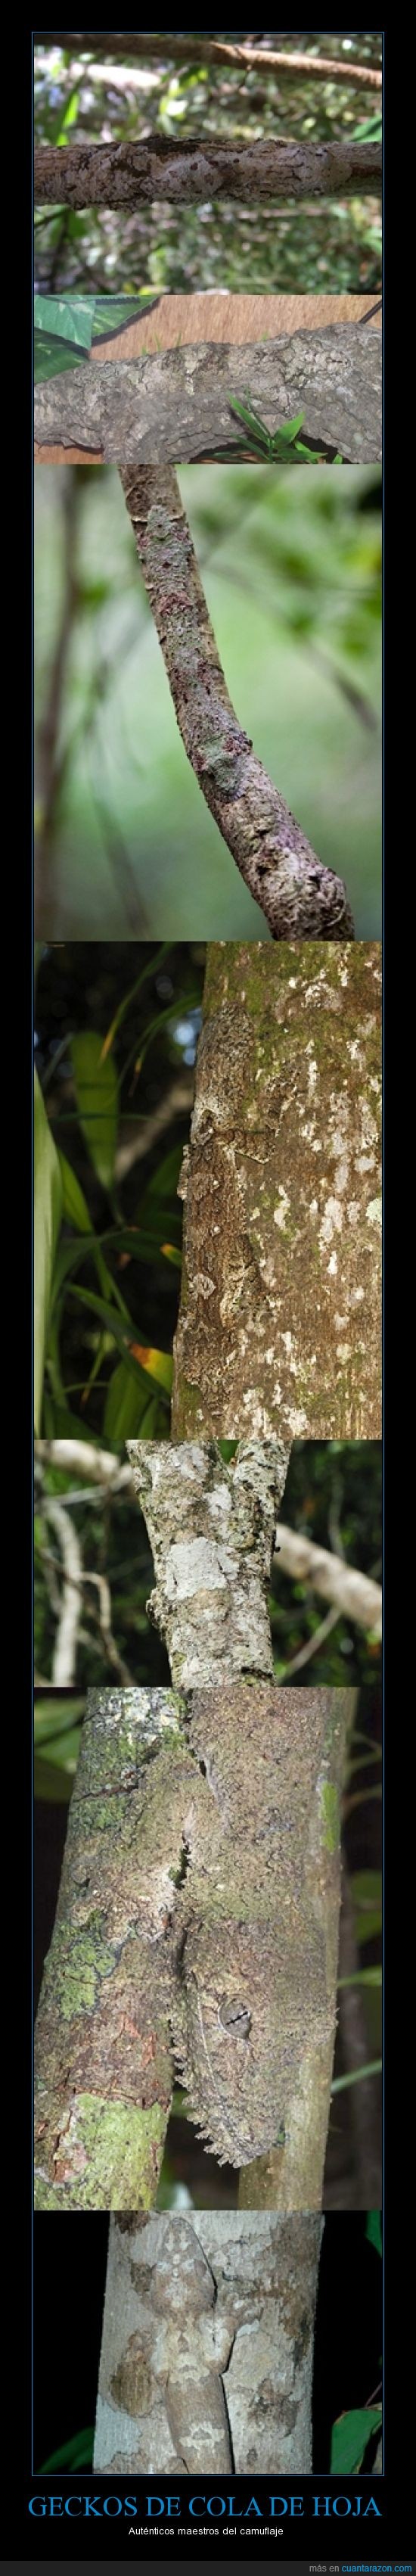 lagartos,gecko de cola de hoja,género Uroplatus,camuflaje